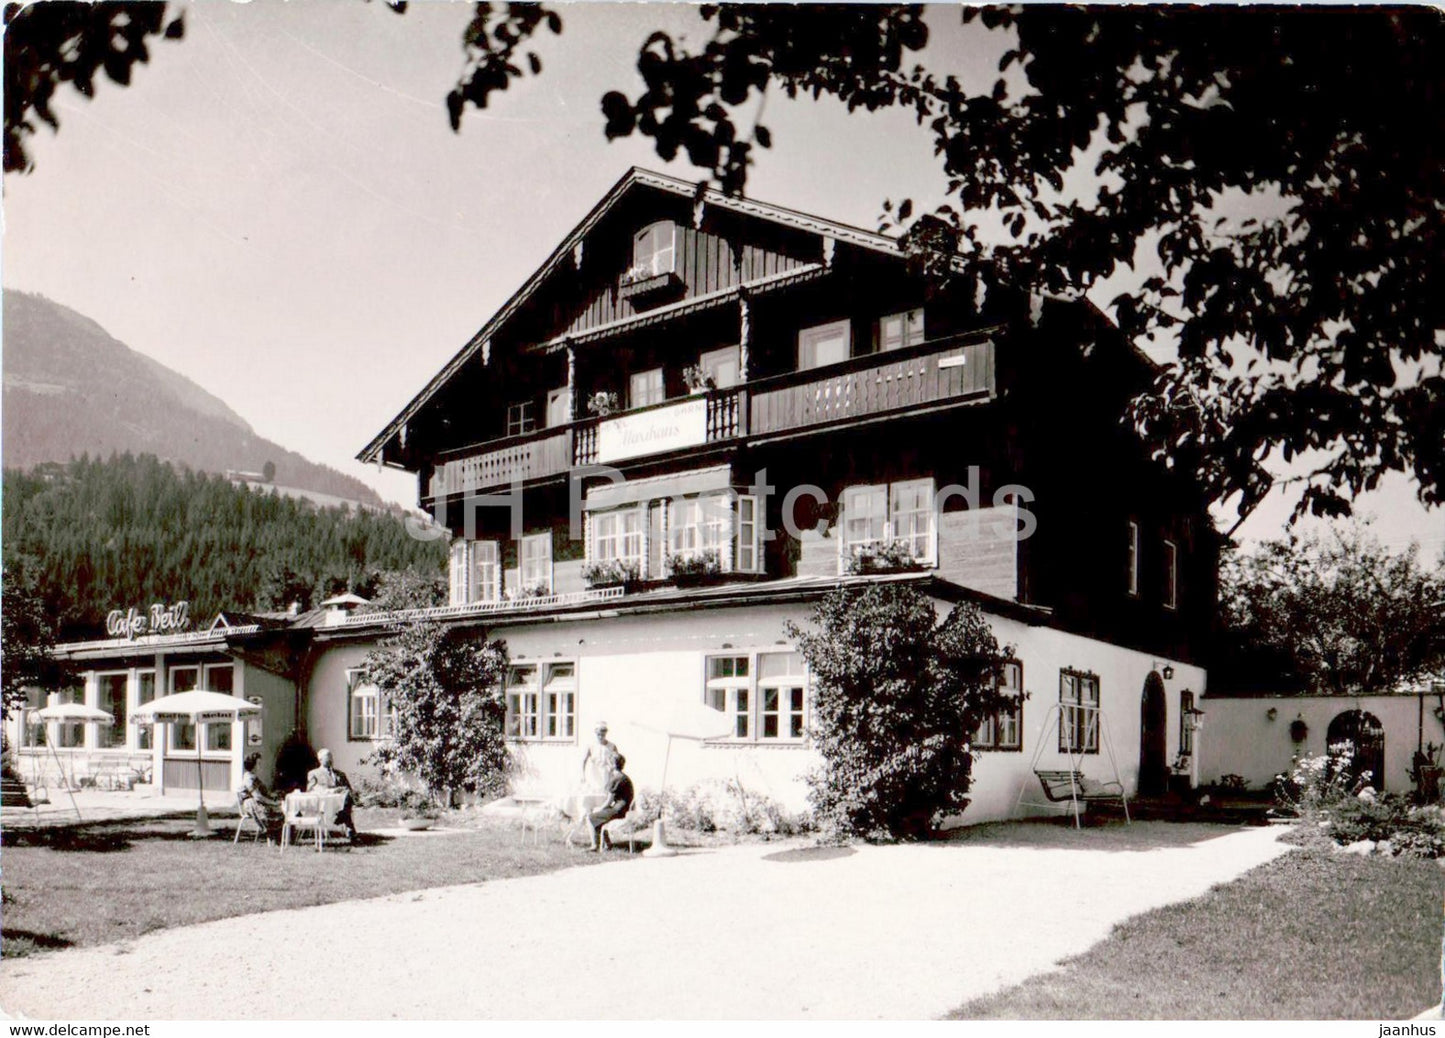 Cafe Beil - Kirchberg Tirol - old postcard - 1963 - Austria - used - JH Postcards